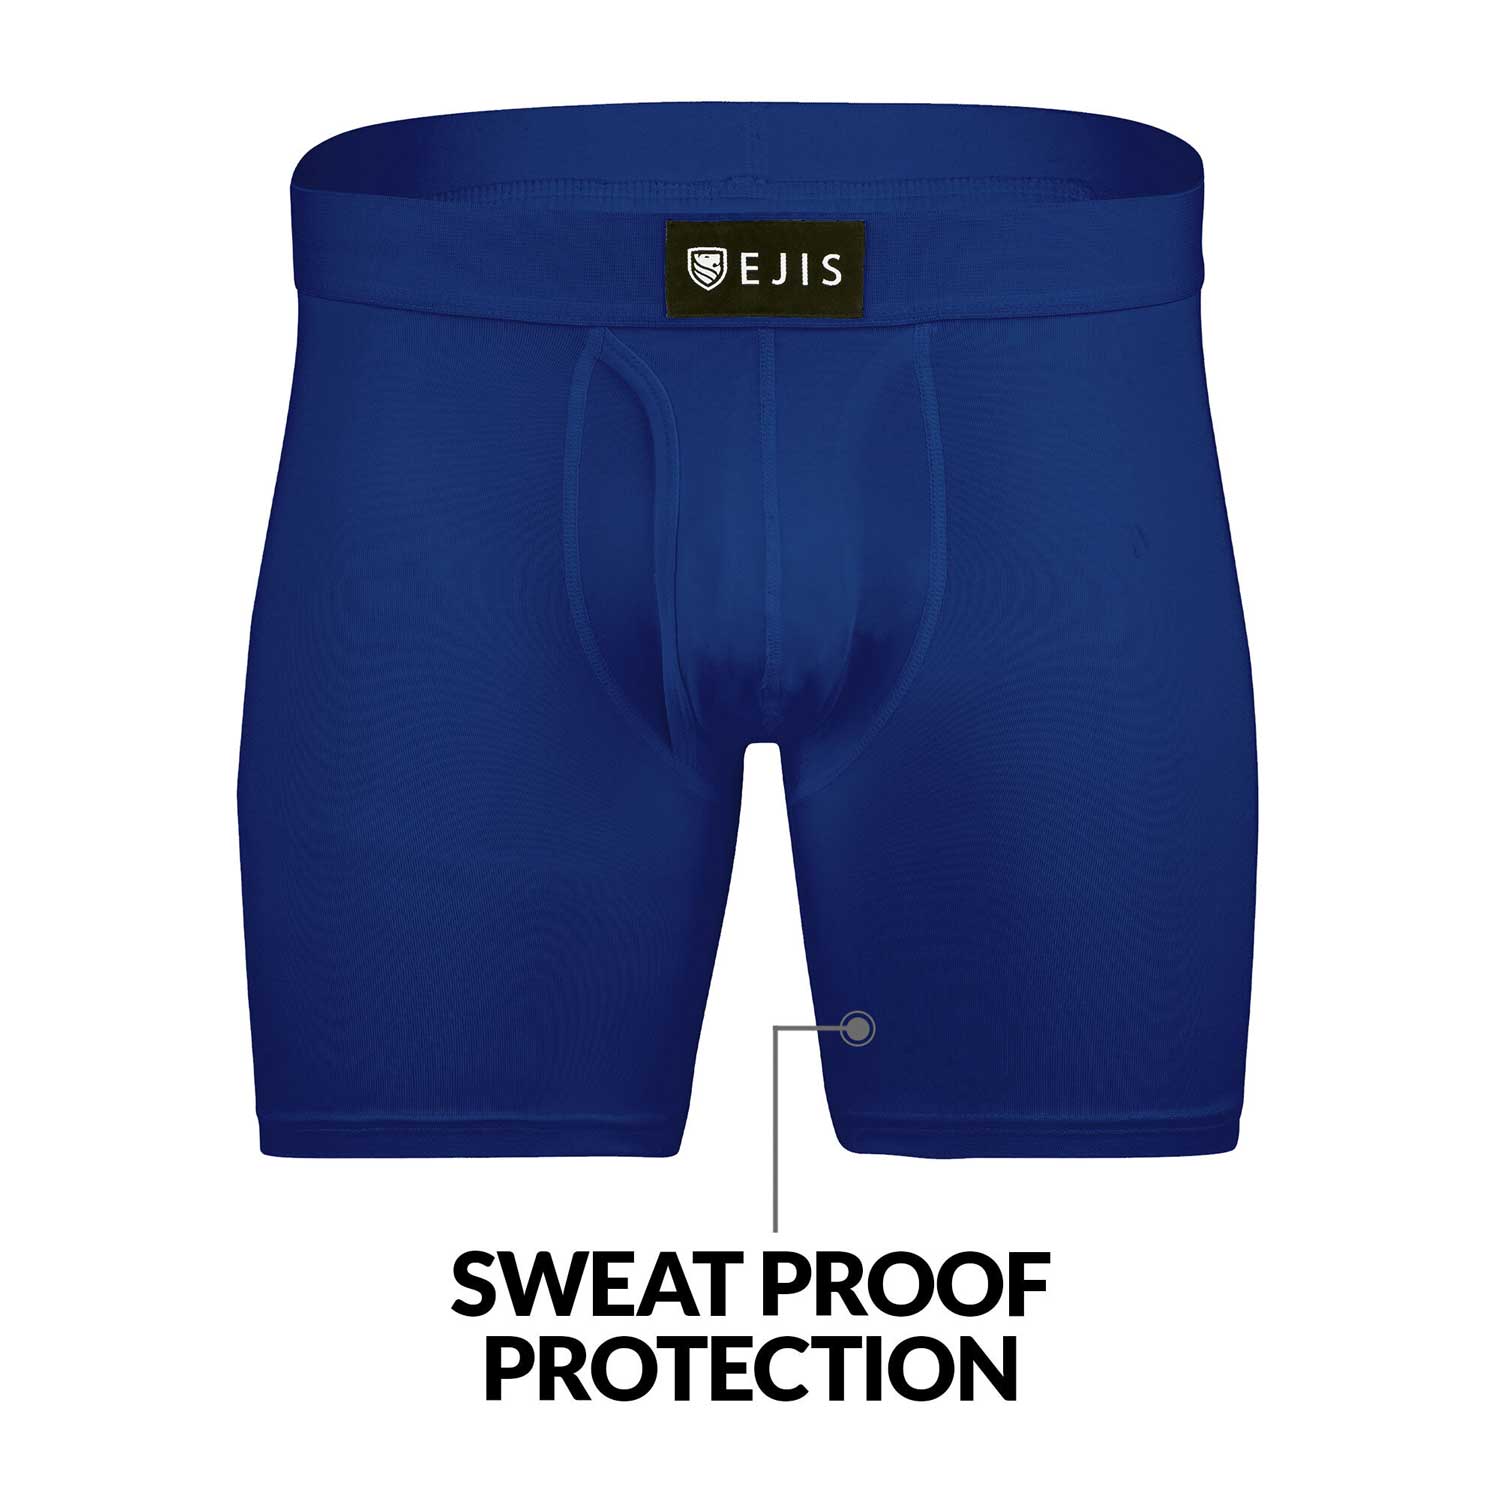 Ejis Essential Boxer Briefs - How it works - Underwear Review - Wearviews 